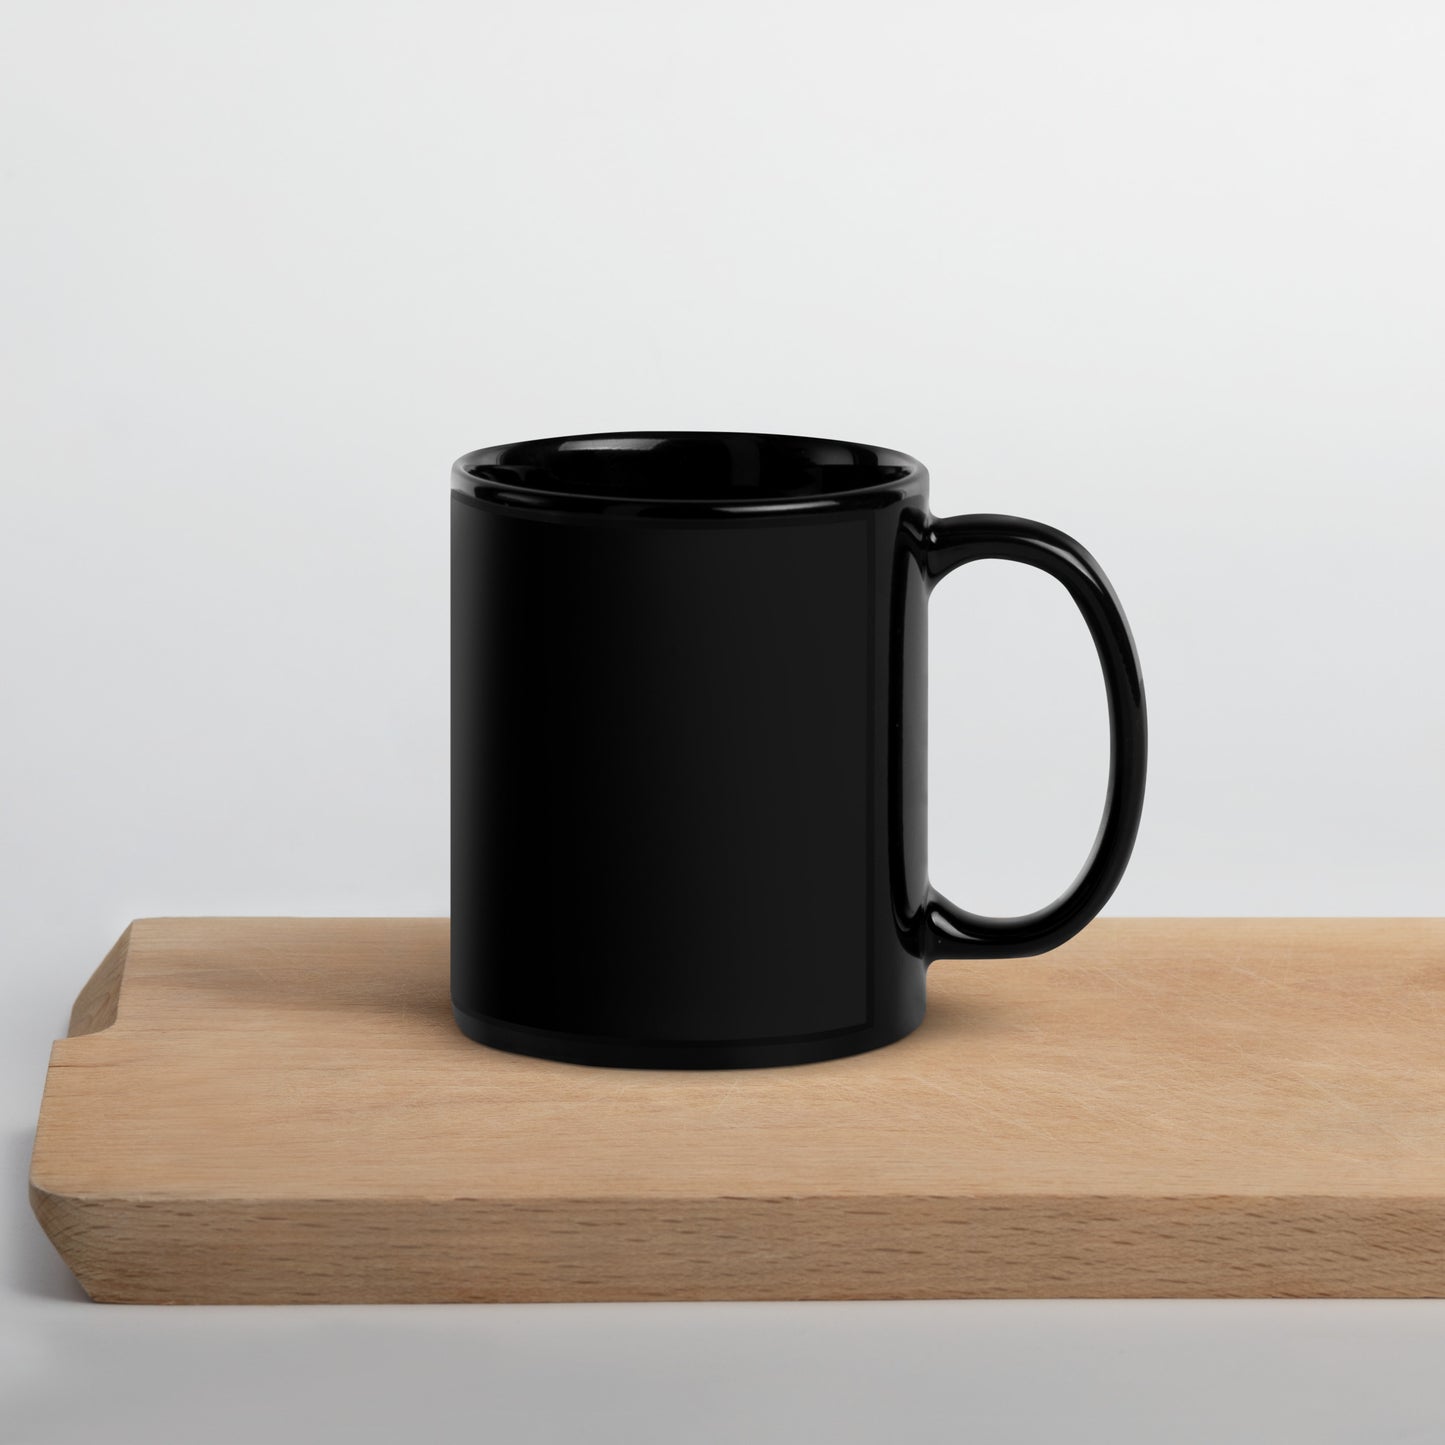 DeepSea Coffee Black Glossy Mug